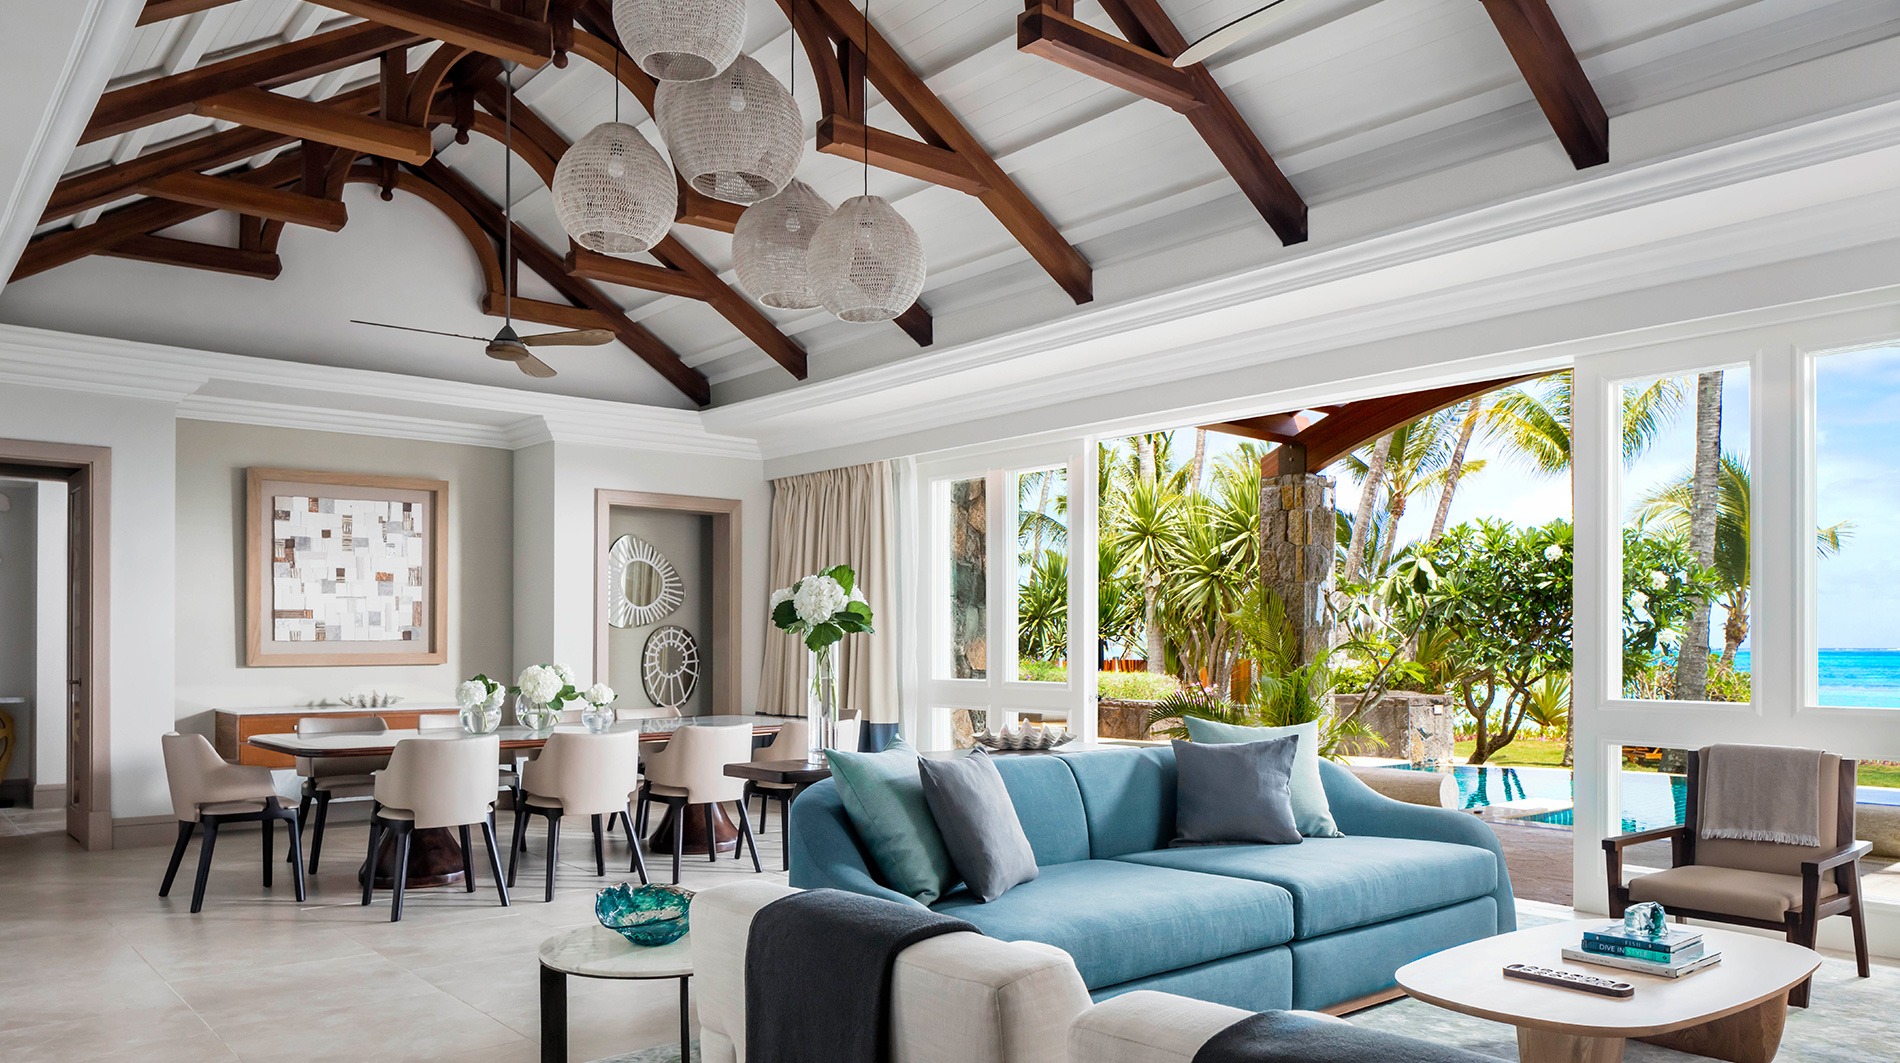 Buy luxury villa One&Only at Saint Géran in Mauritius - 5-star prestige hotel